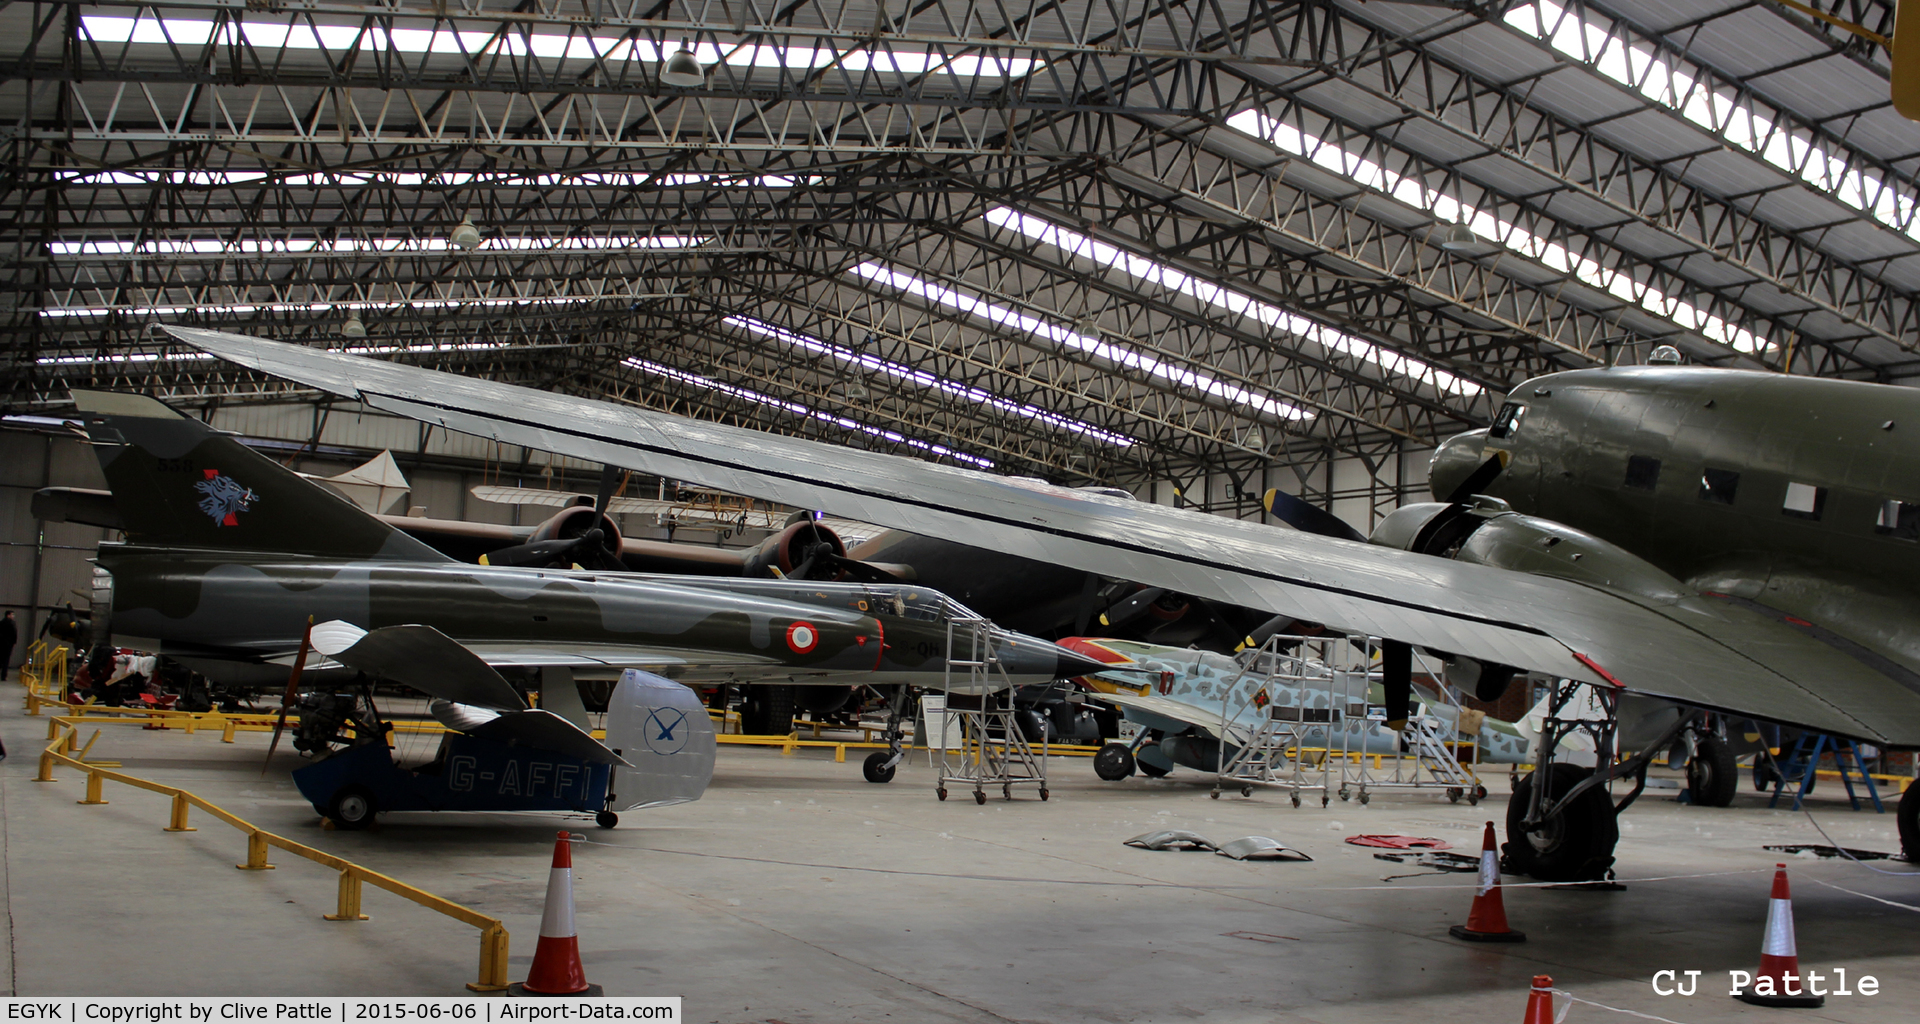 EGYK Airport - Part of the main hangar display at the Yorkshire Air Museum, Elvington, Yorks, UK former EGYK